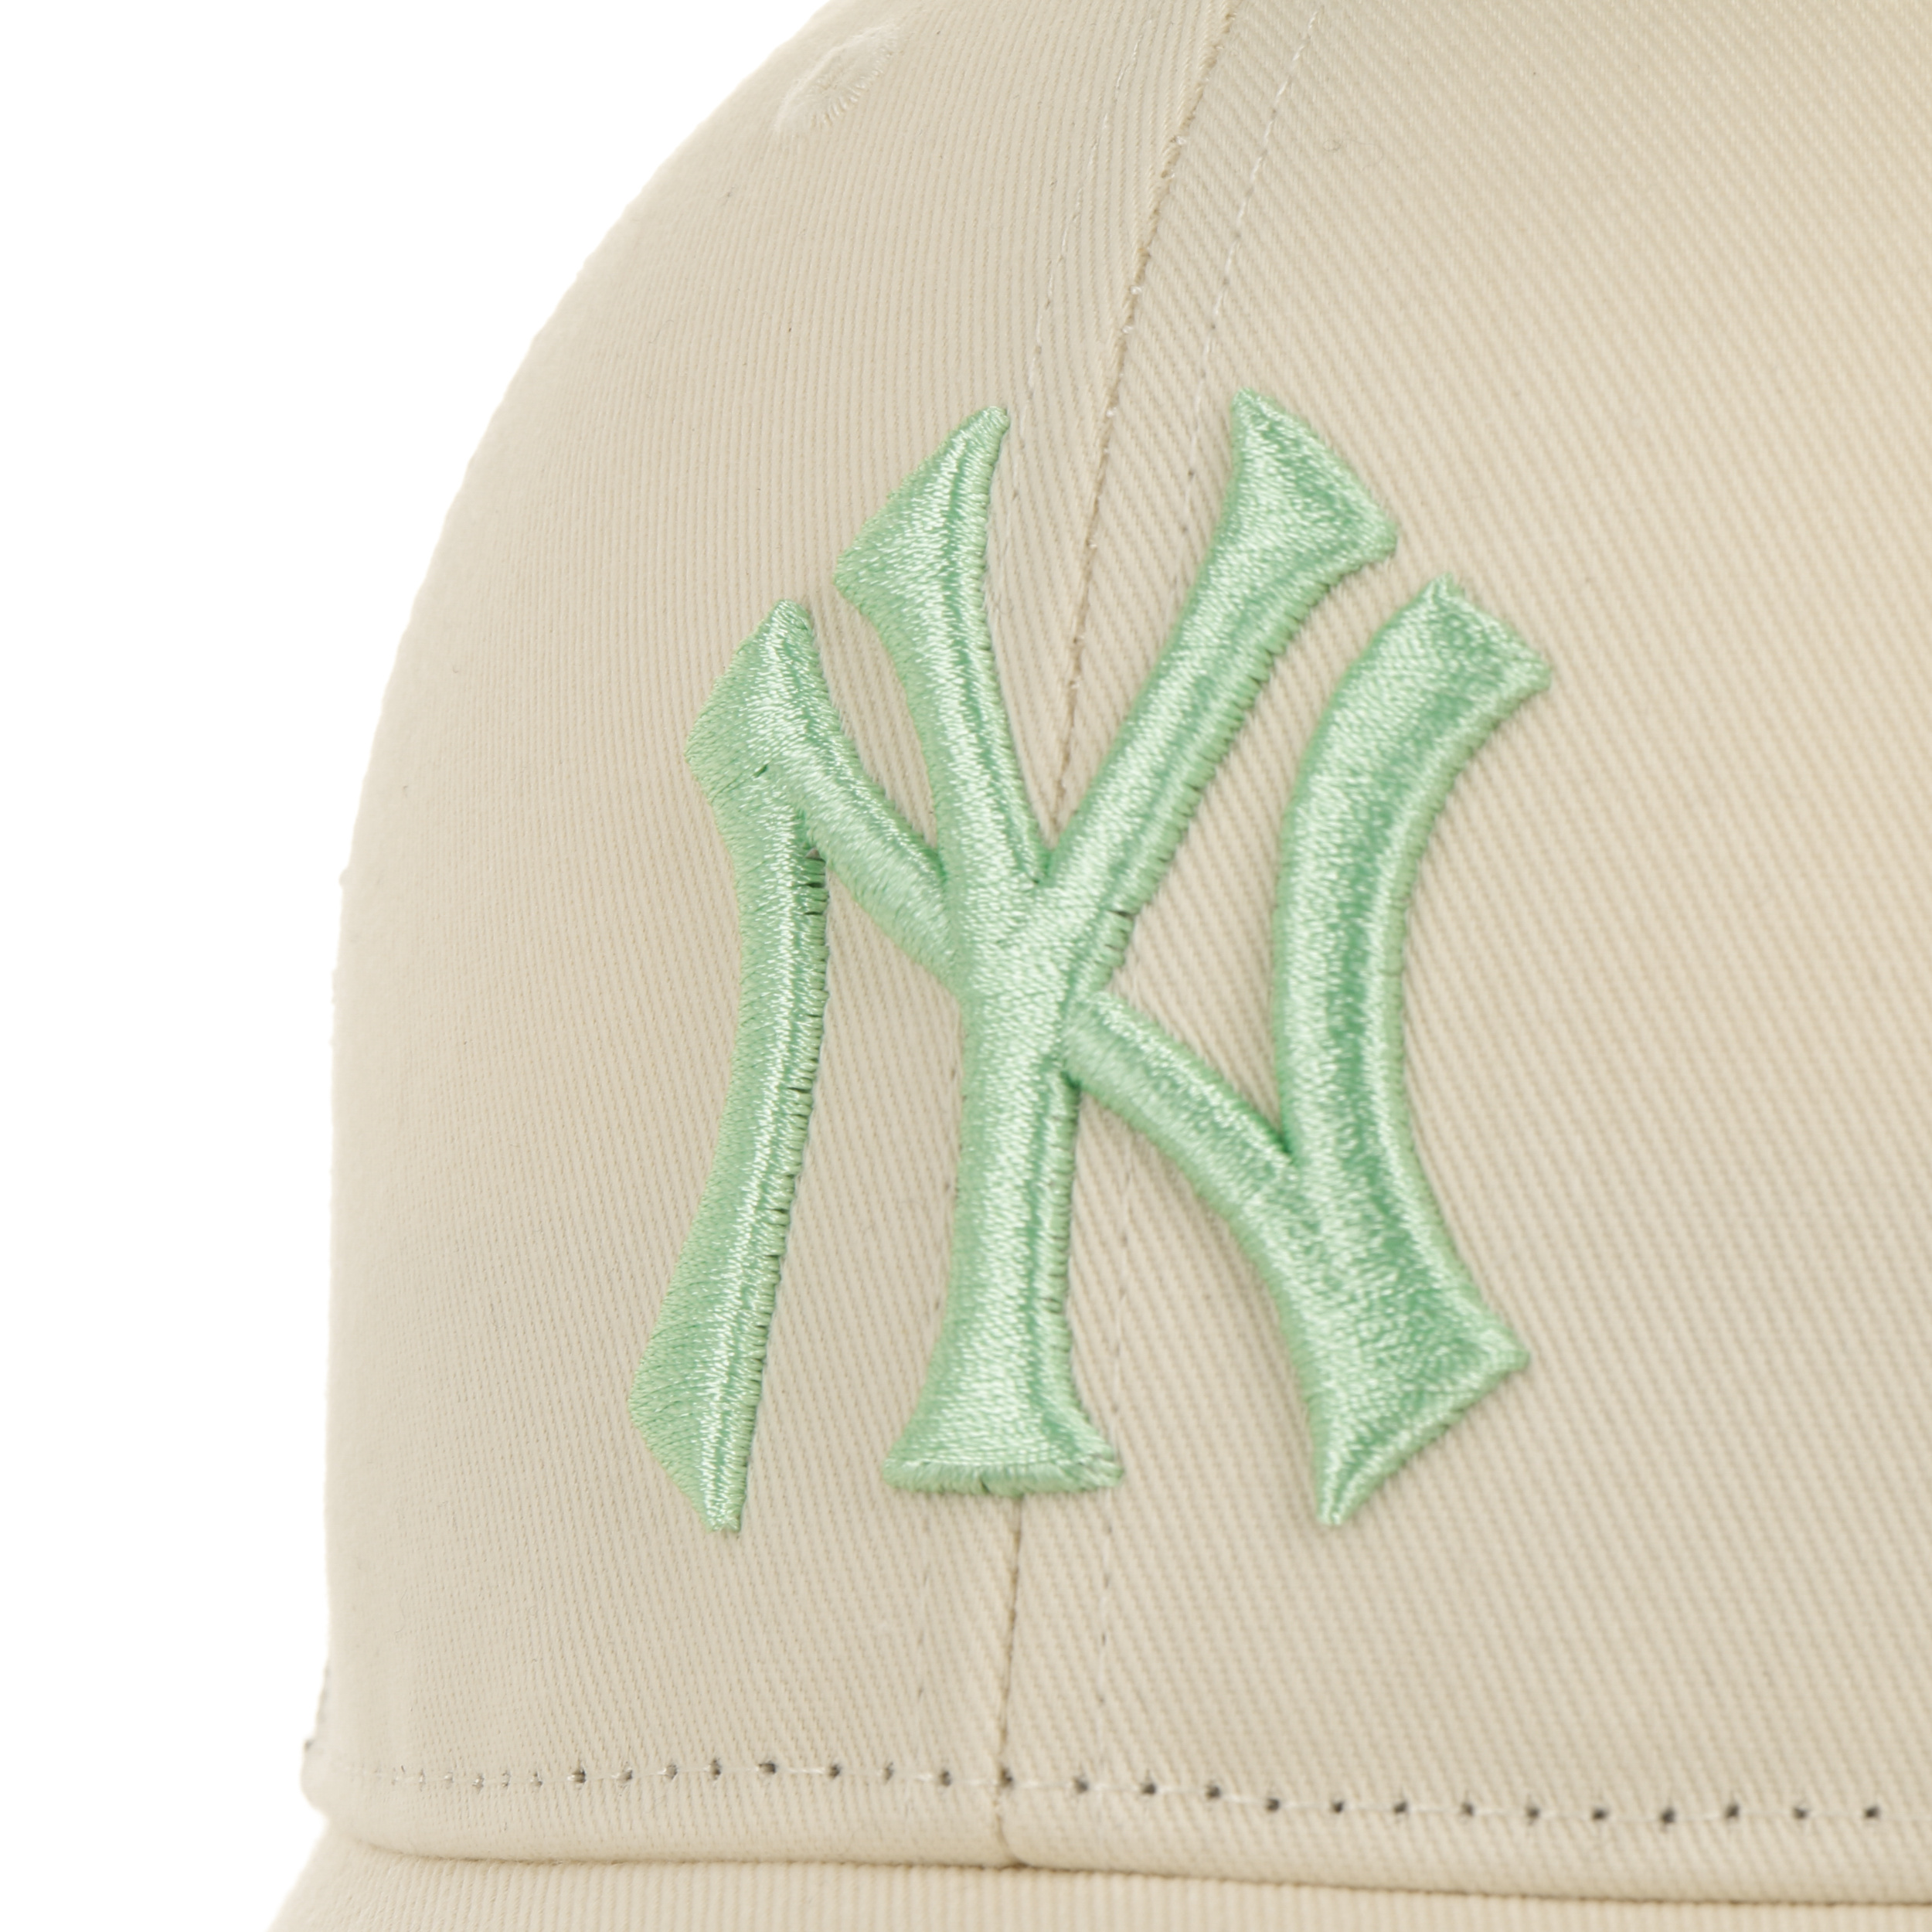 Buy the trucker New Era Yankees fishing color - Brooklyn fizz